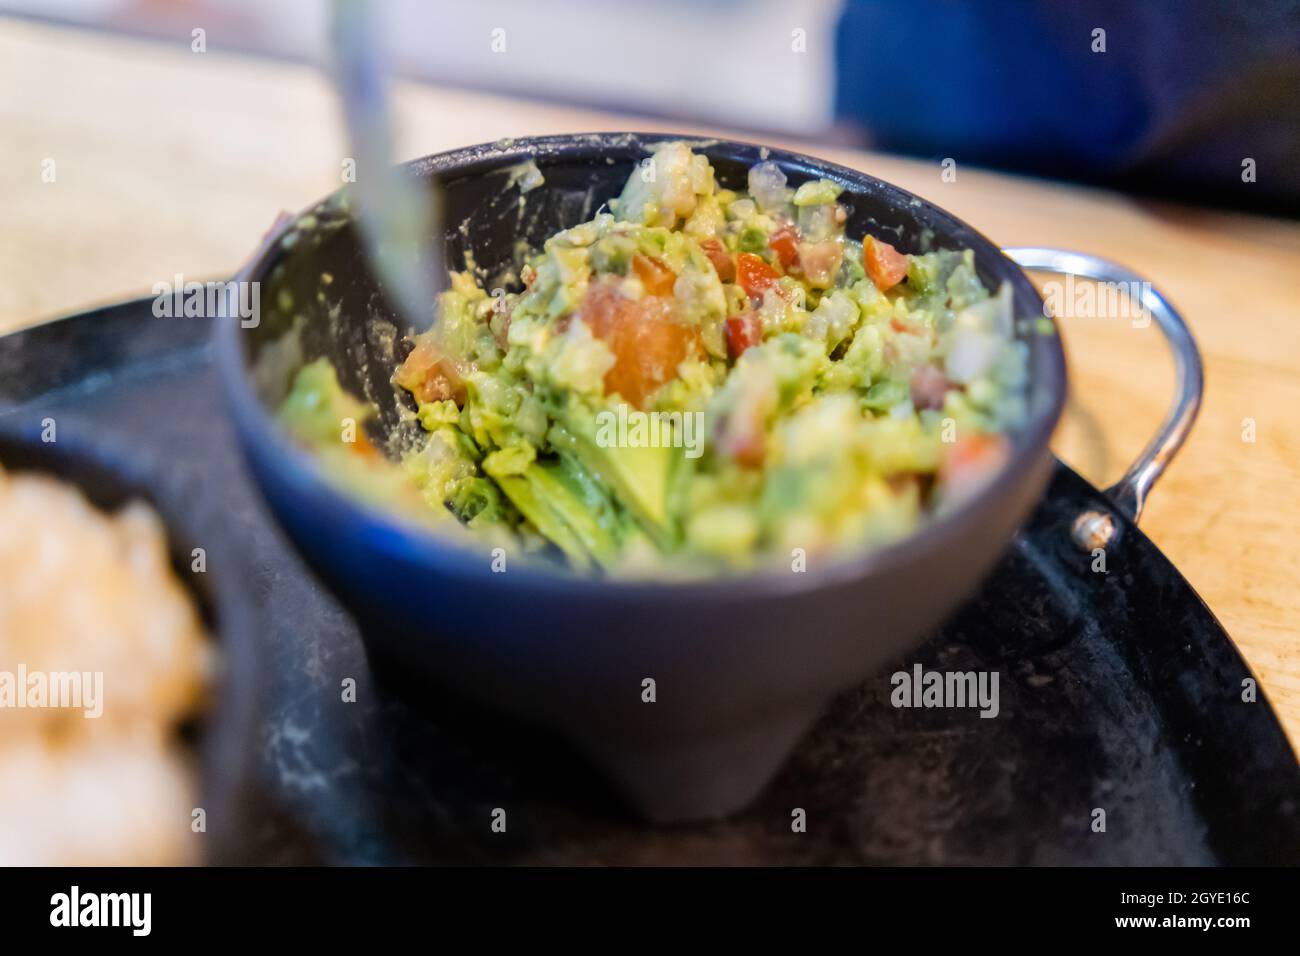 https://c8.alamy.com/comp/2GYE16C/black-bowl-of-delicious-guacamole-on-traditional-mexican-comal-2GYE16C.jpg